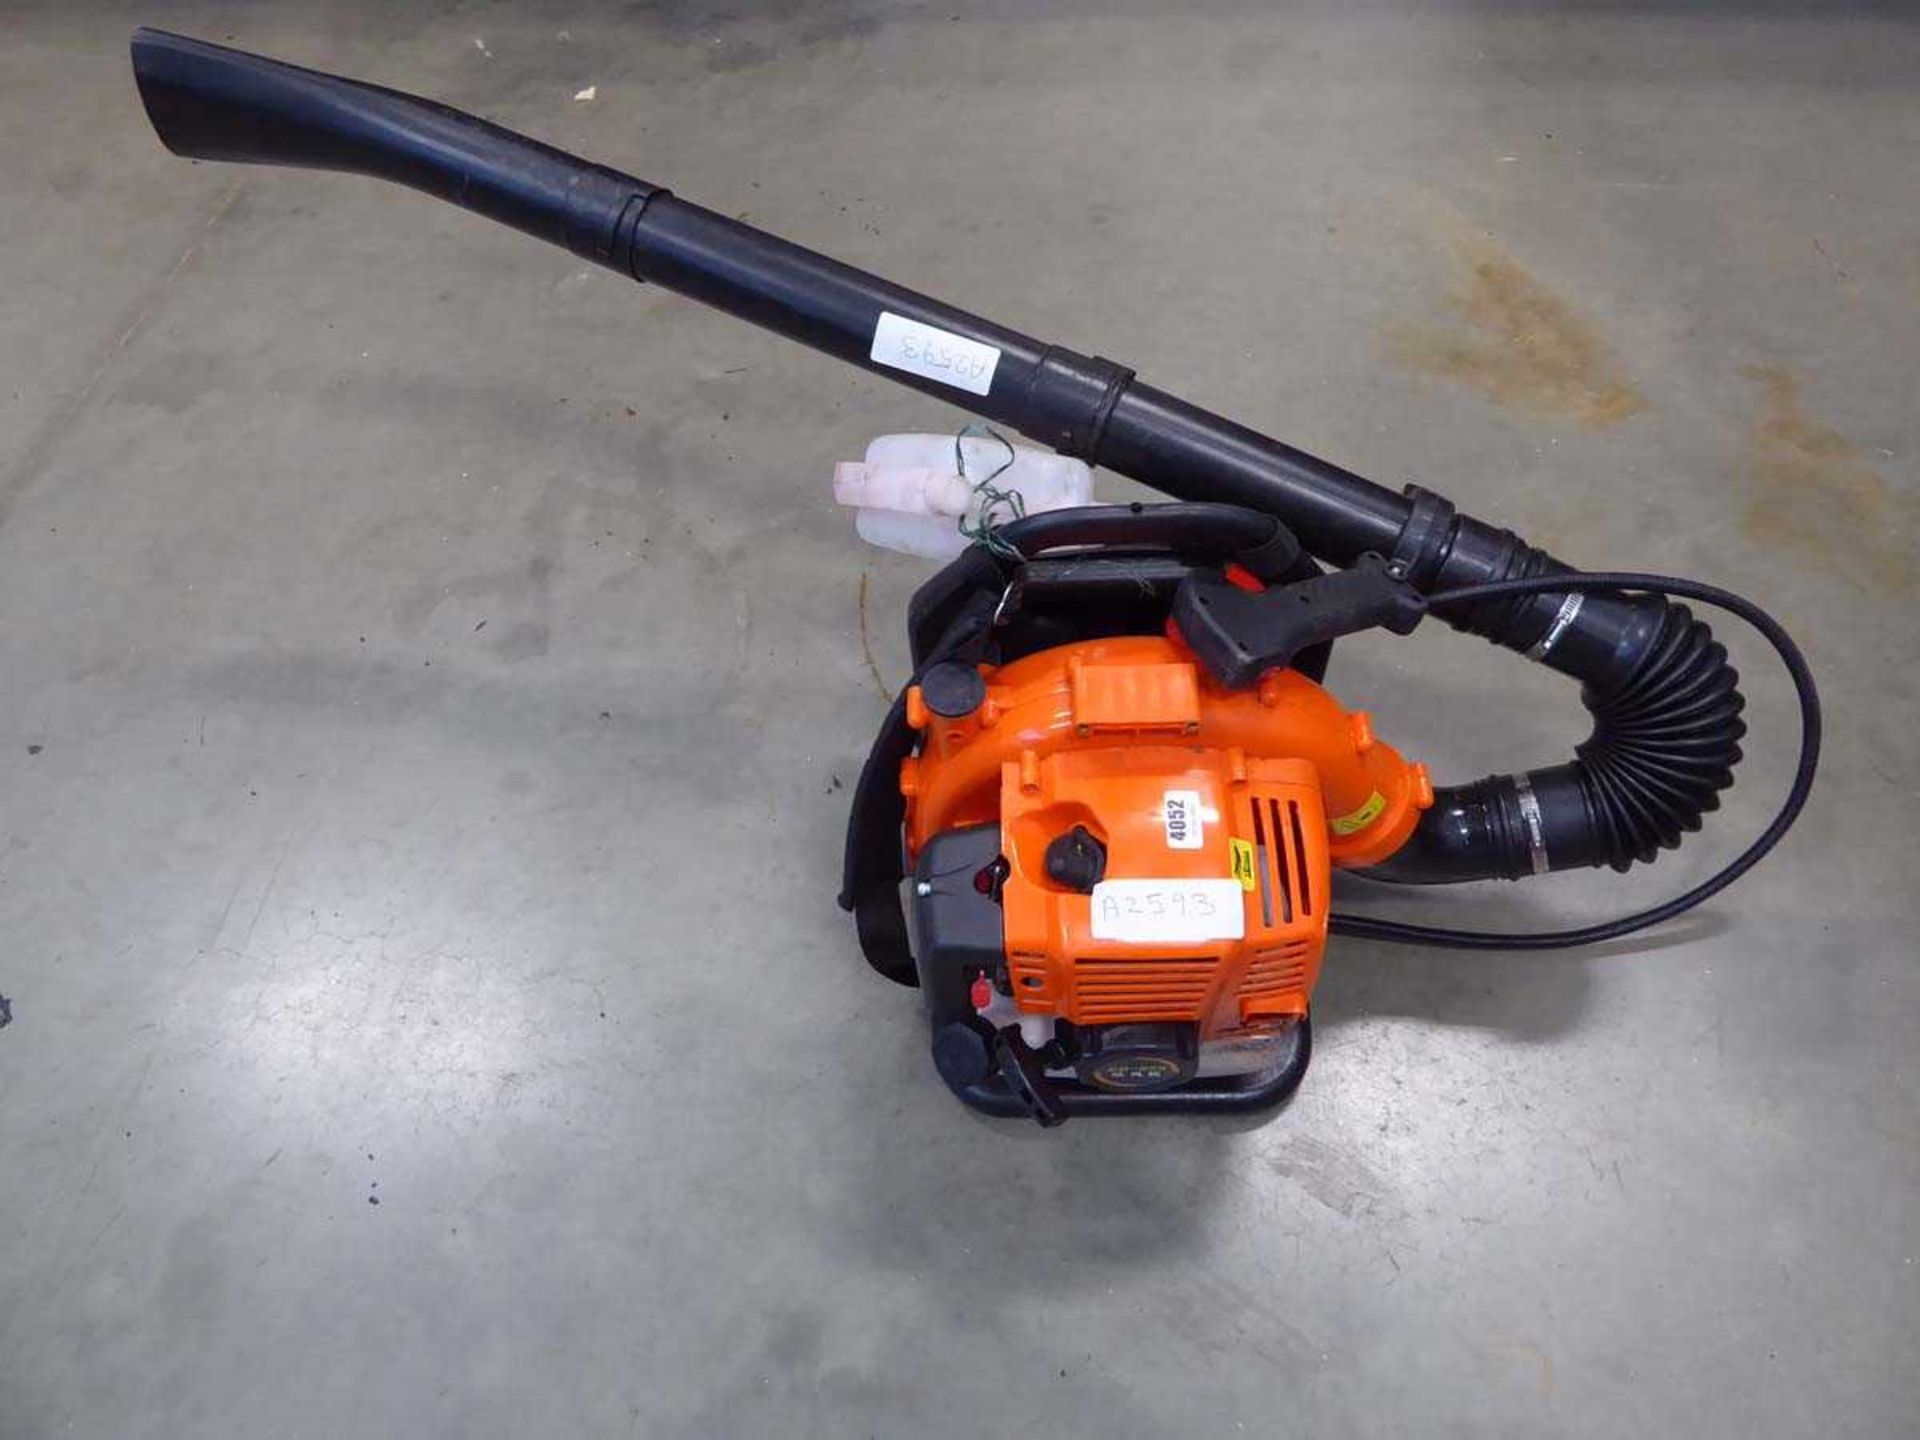 Orange petrol powered leaf blower